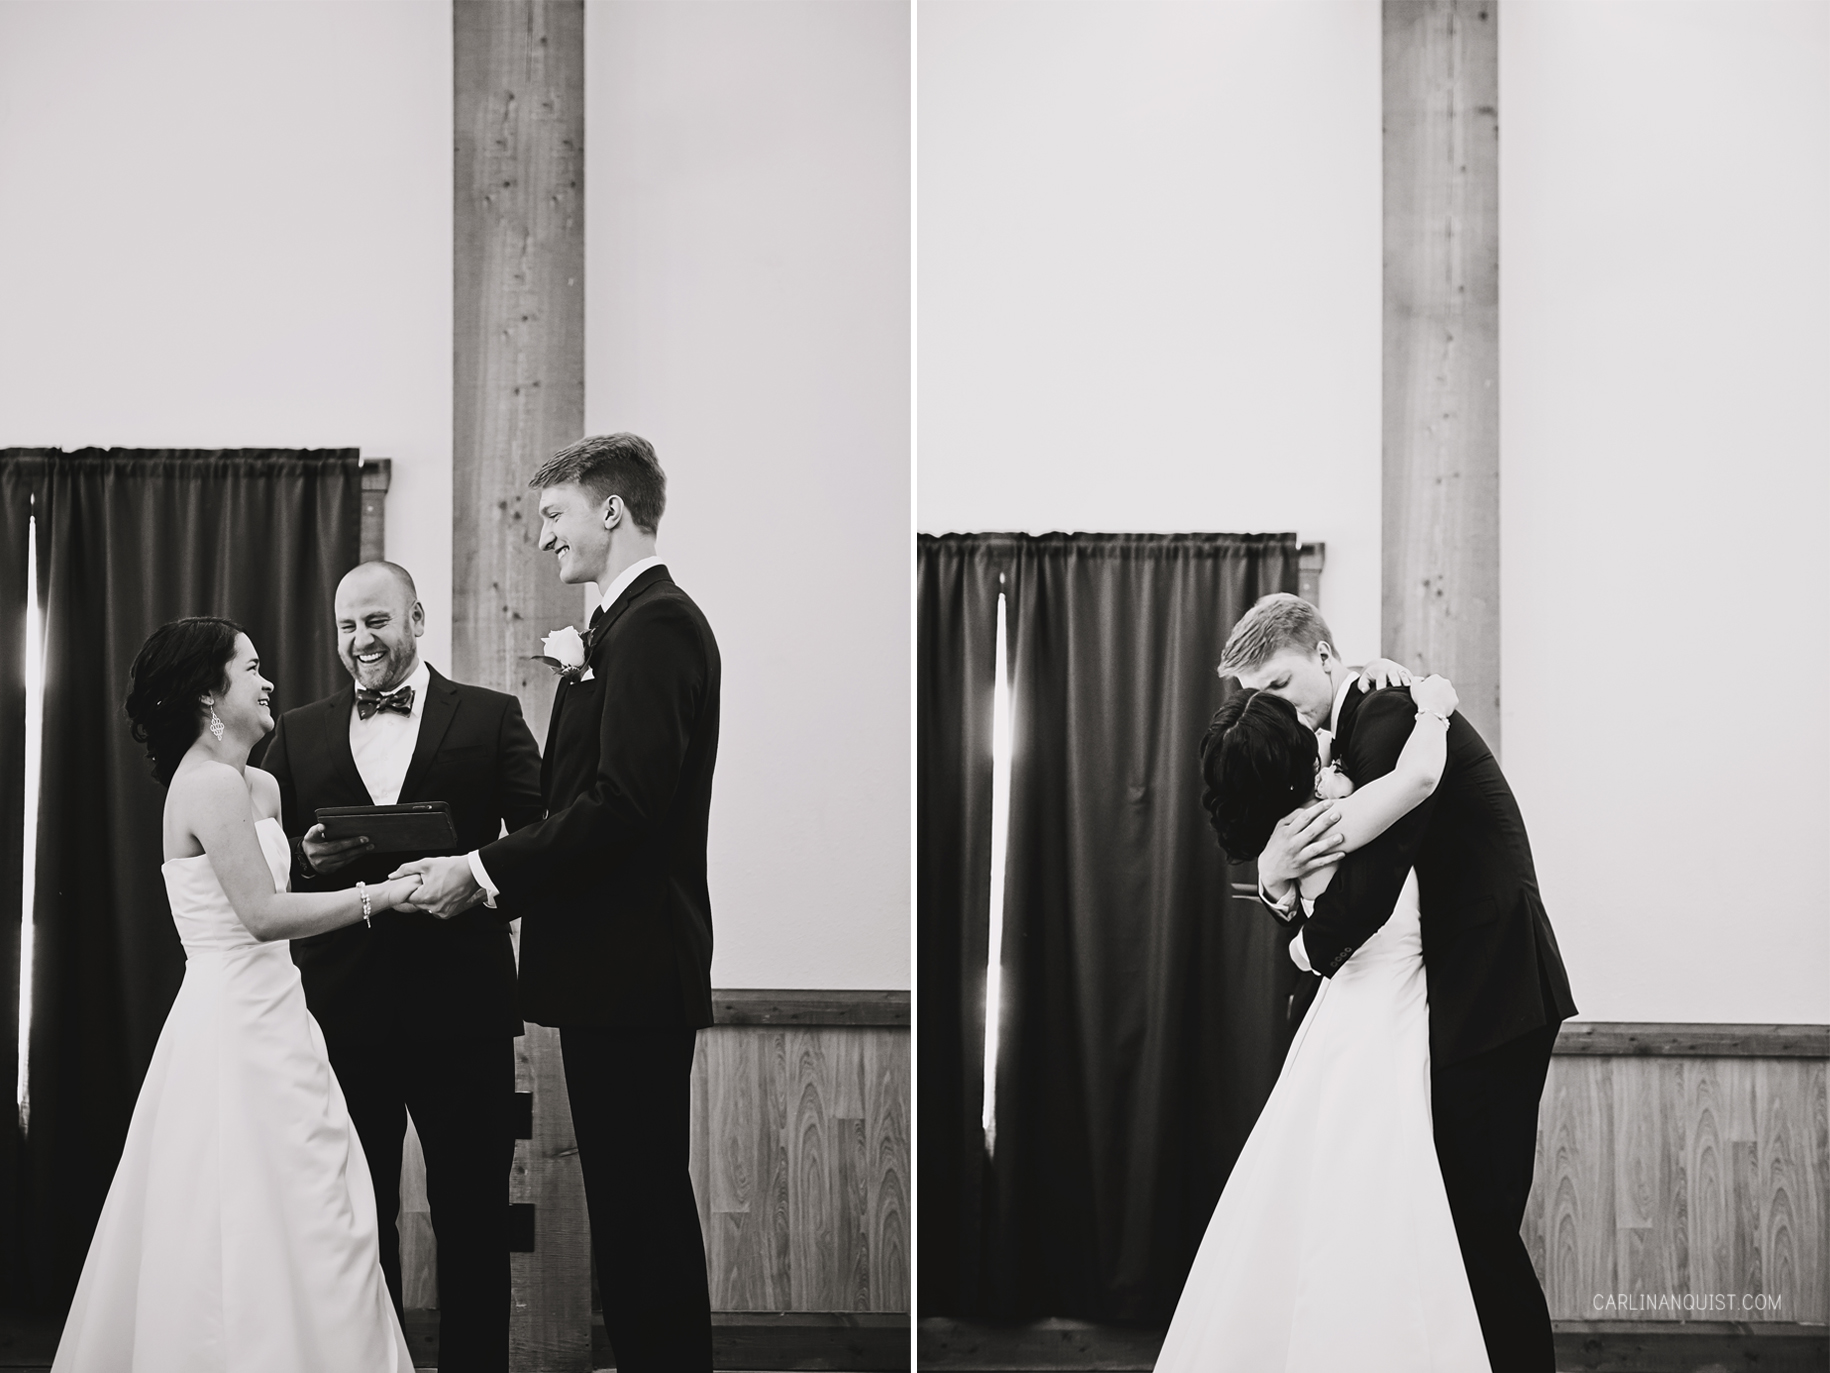 First Kiss | Crowsnest Pass Wedding Photographers | Carlin Anquist Photography